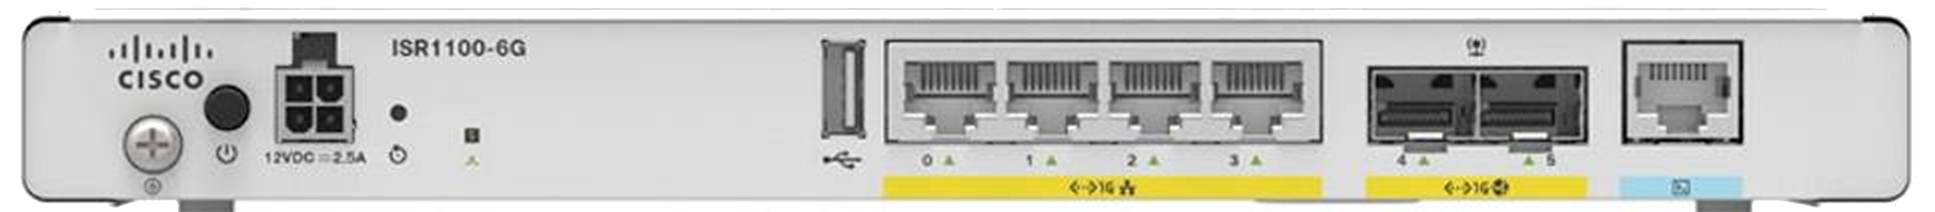 Rca Informatique - Image du produit : ISR1100 ROUTER 4 GE LAN/WAN PORTS AND 2 SFP PORTS 4GB RAM